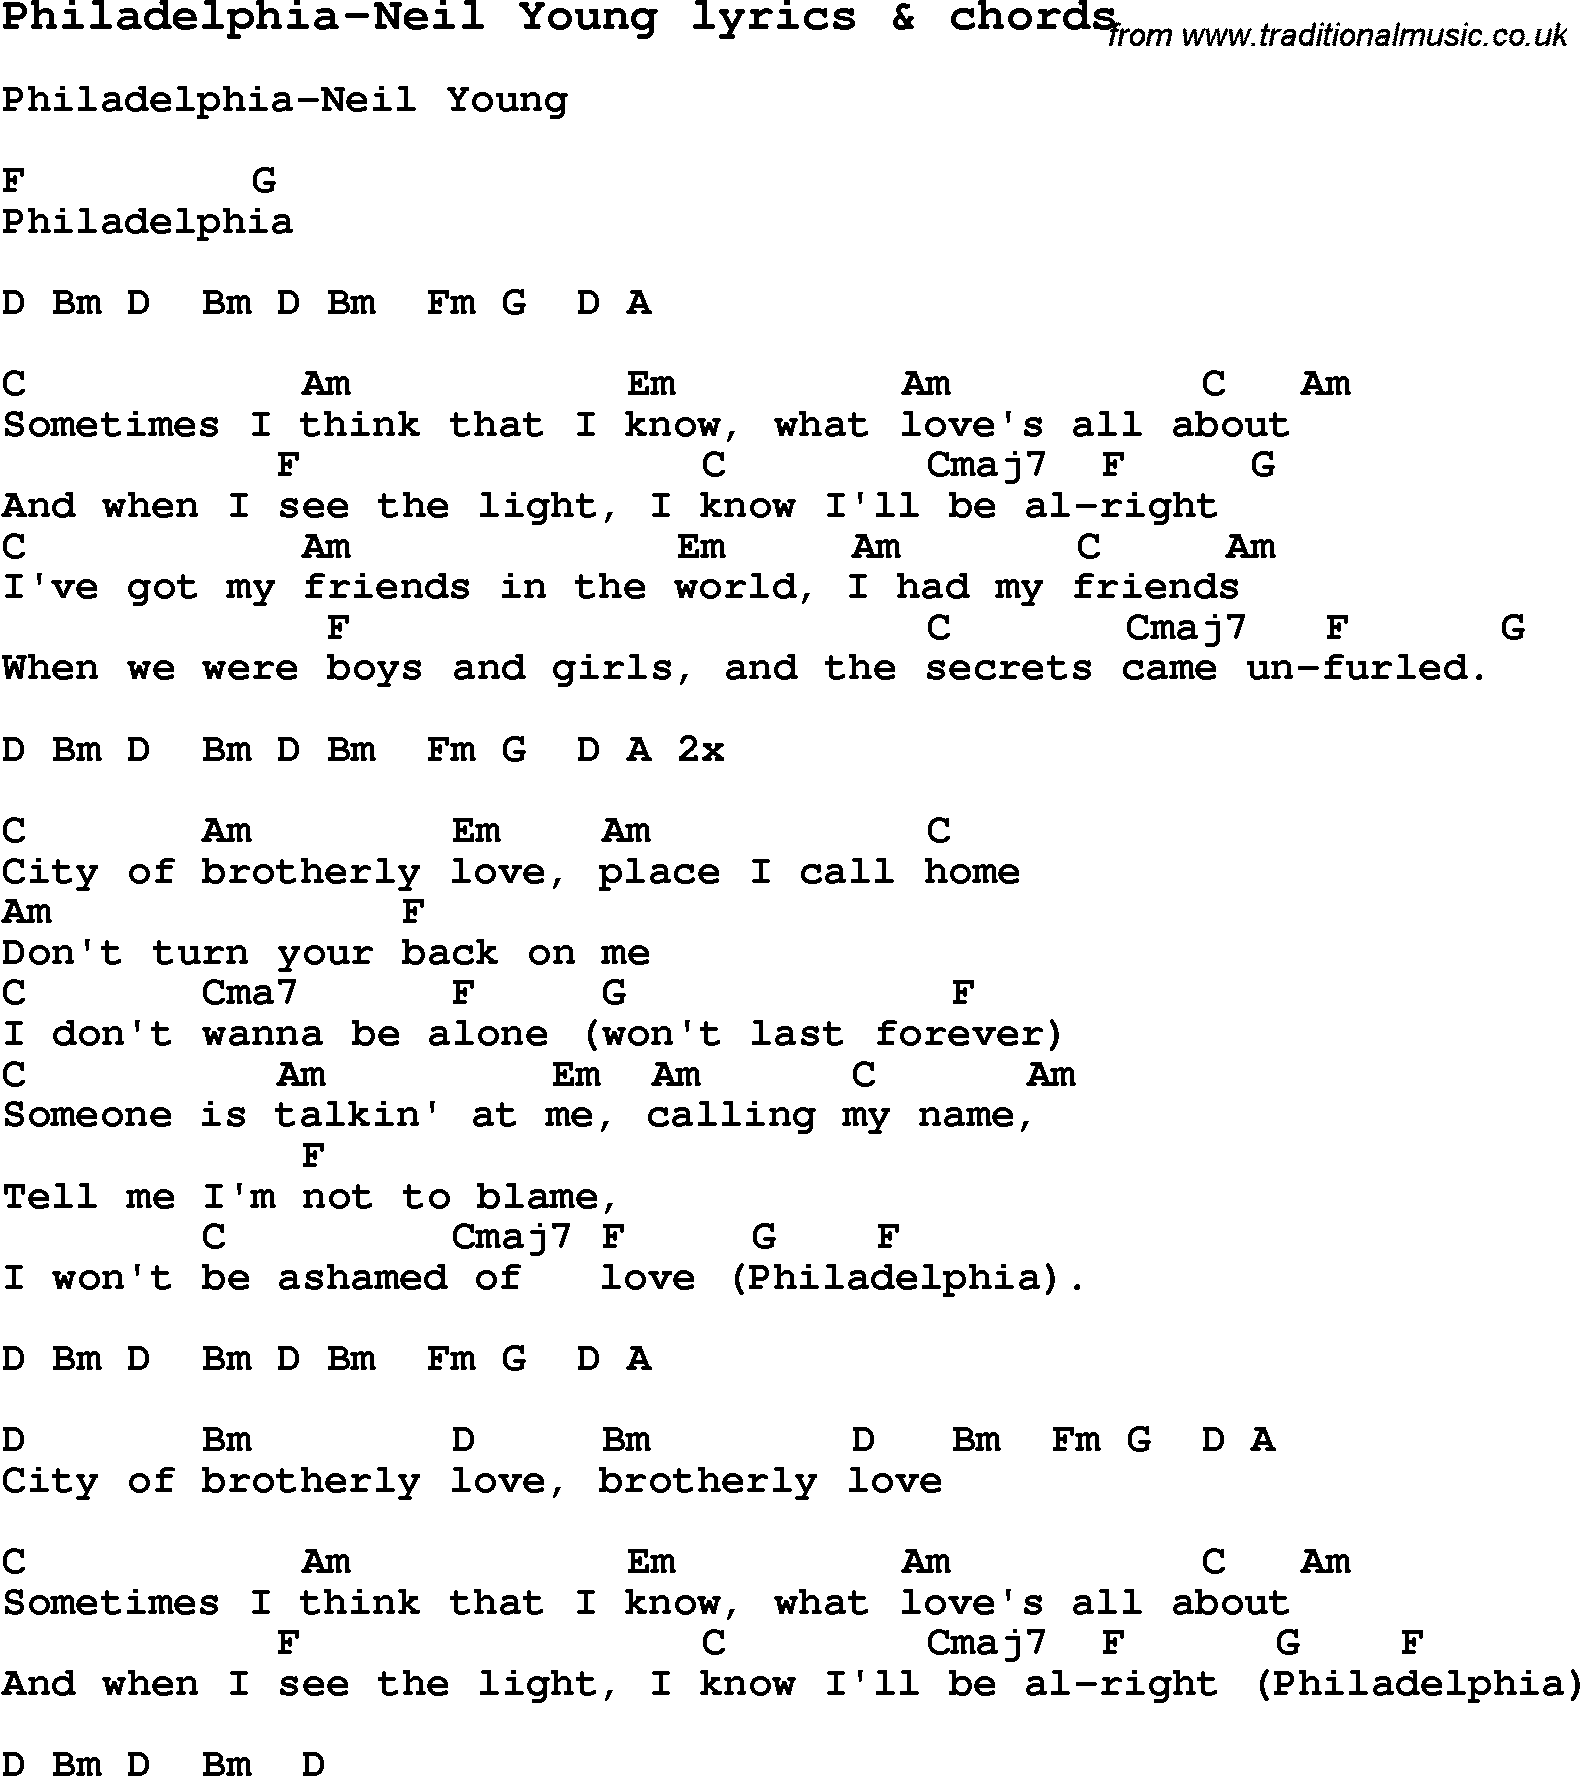 Love Song Lyrics for: Philadelphia-Neil Young with chords for Ukulele, Guitar Banjo etc.